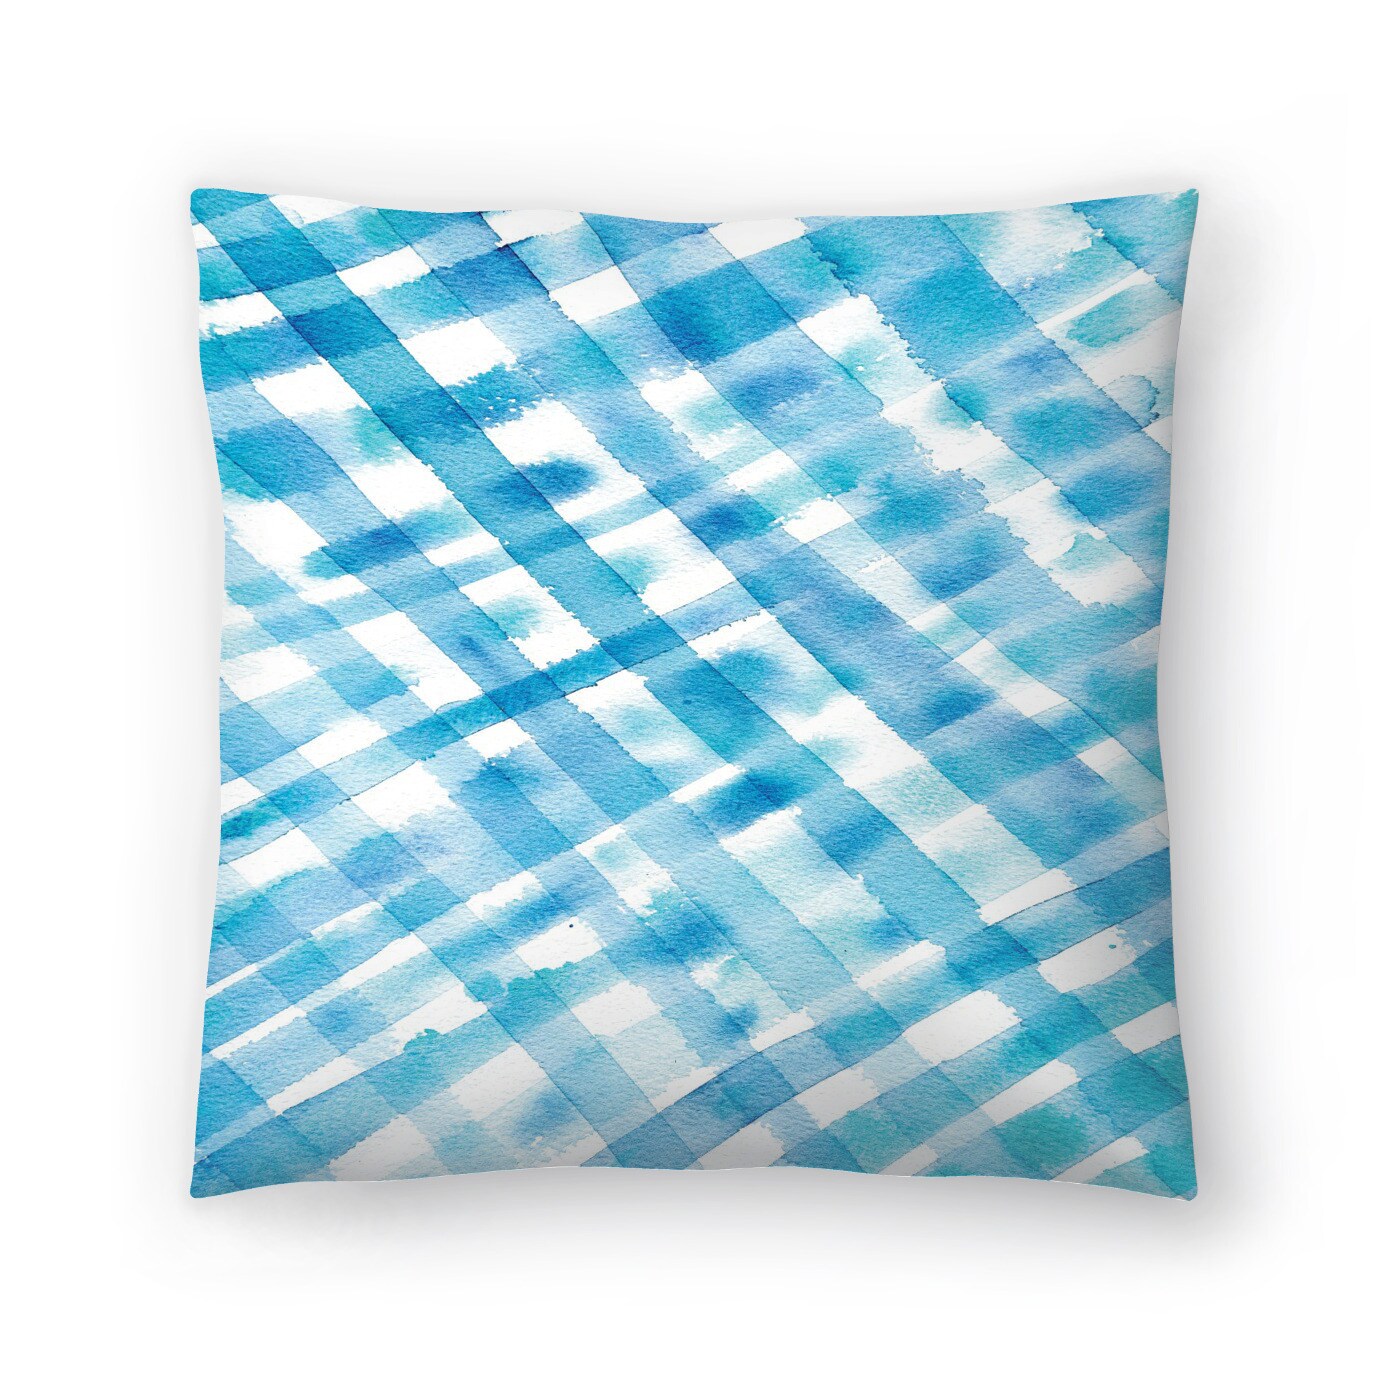 Flor Indigo Cross Stripe Throw Pillow Americanflat Decorative Pillow